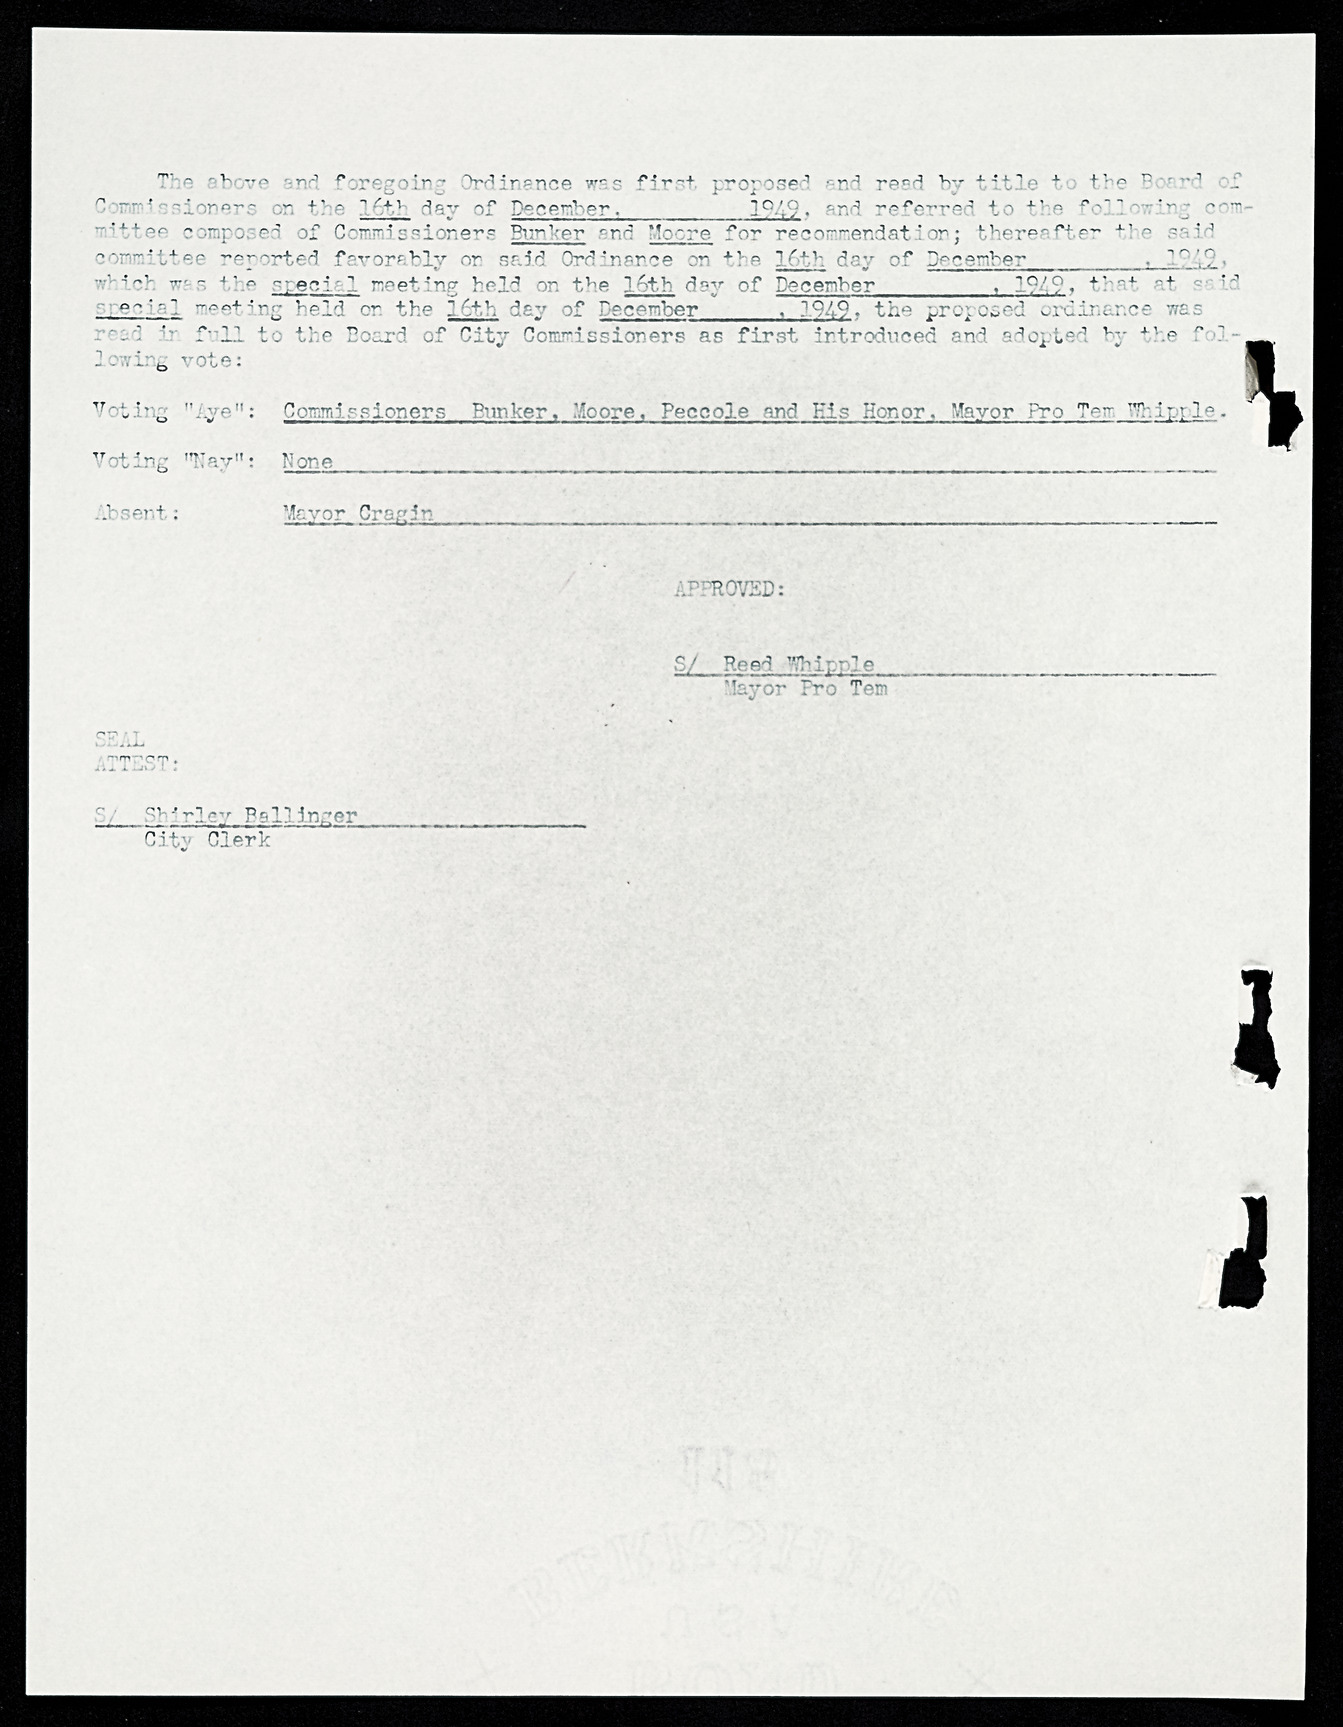 Las Vegas City Ordinances, March 31, 1933 to October 25, 1950, lvc000014-446